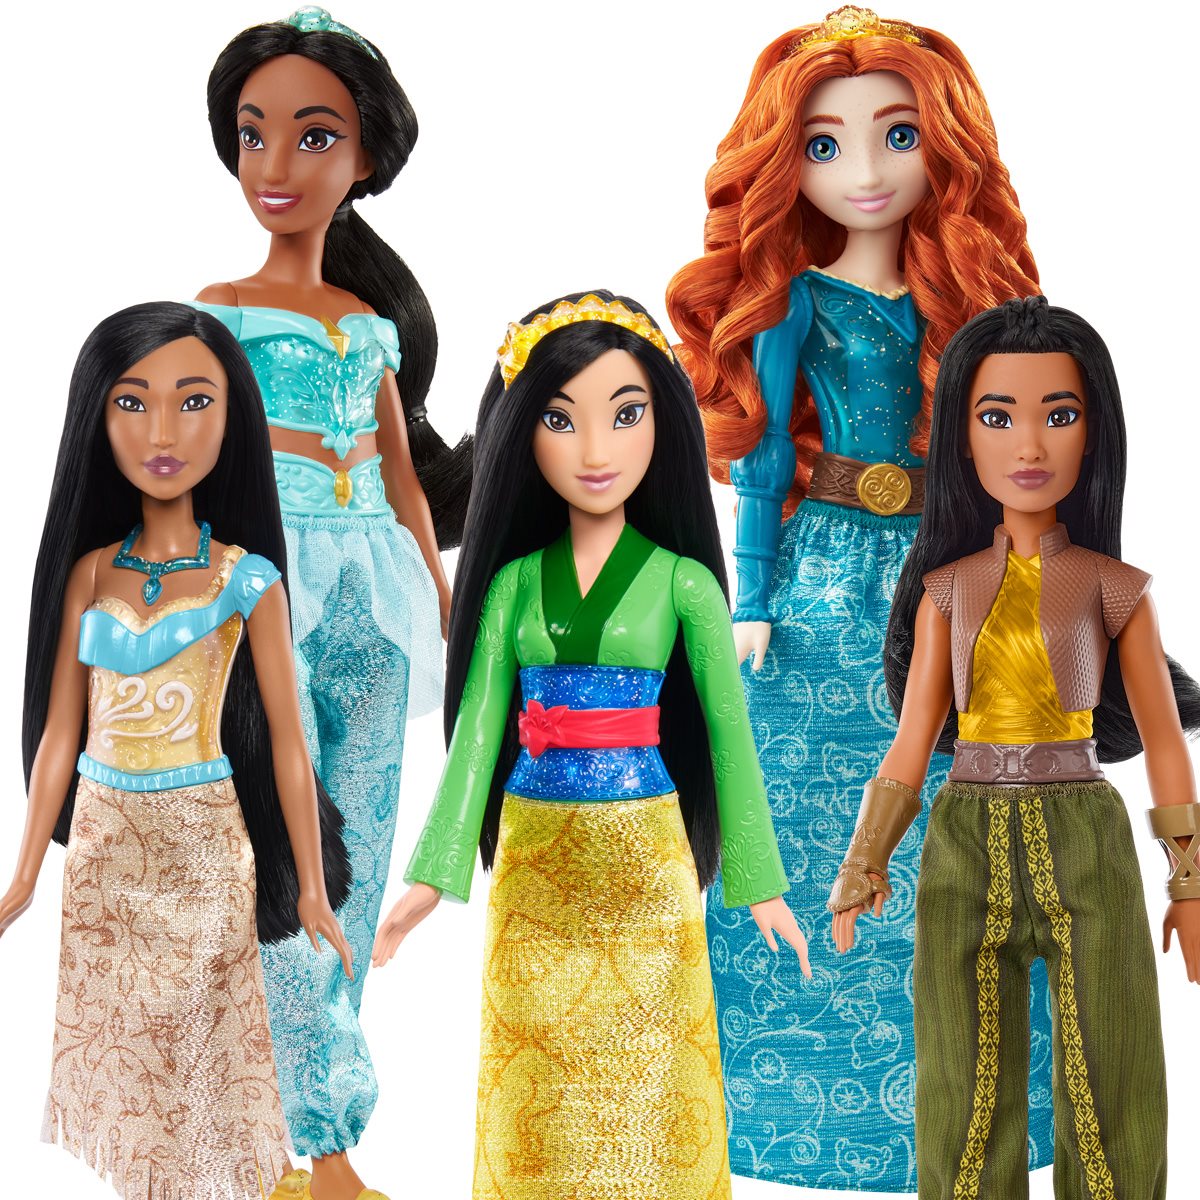 Disney Princess Story Sparkle Princess Doll 7-Pk Gift Set